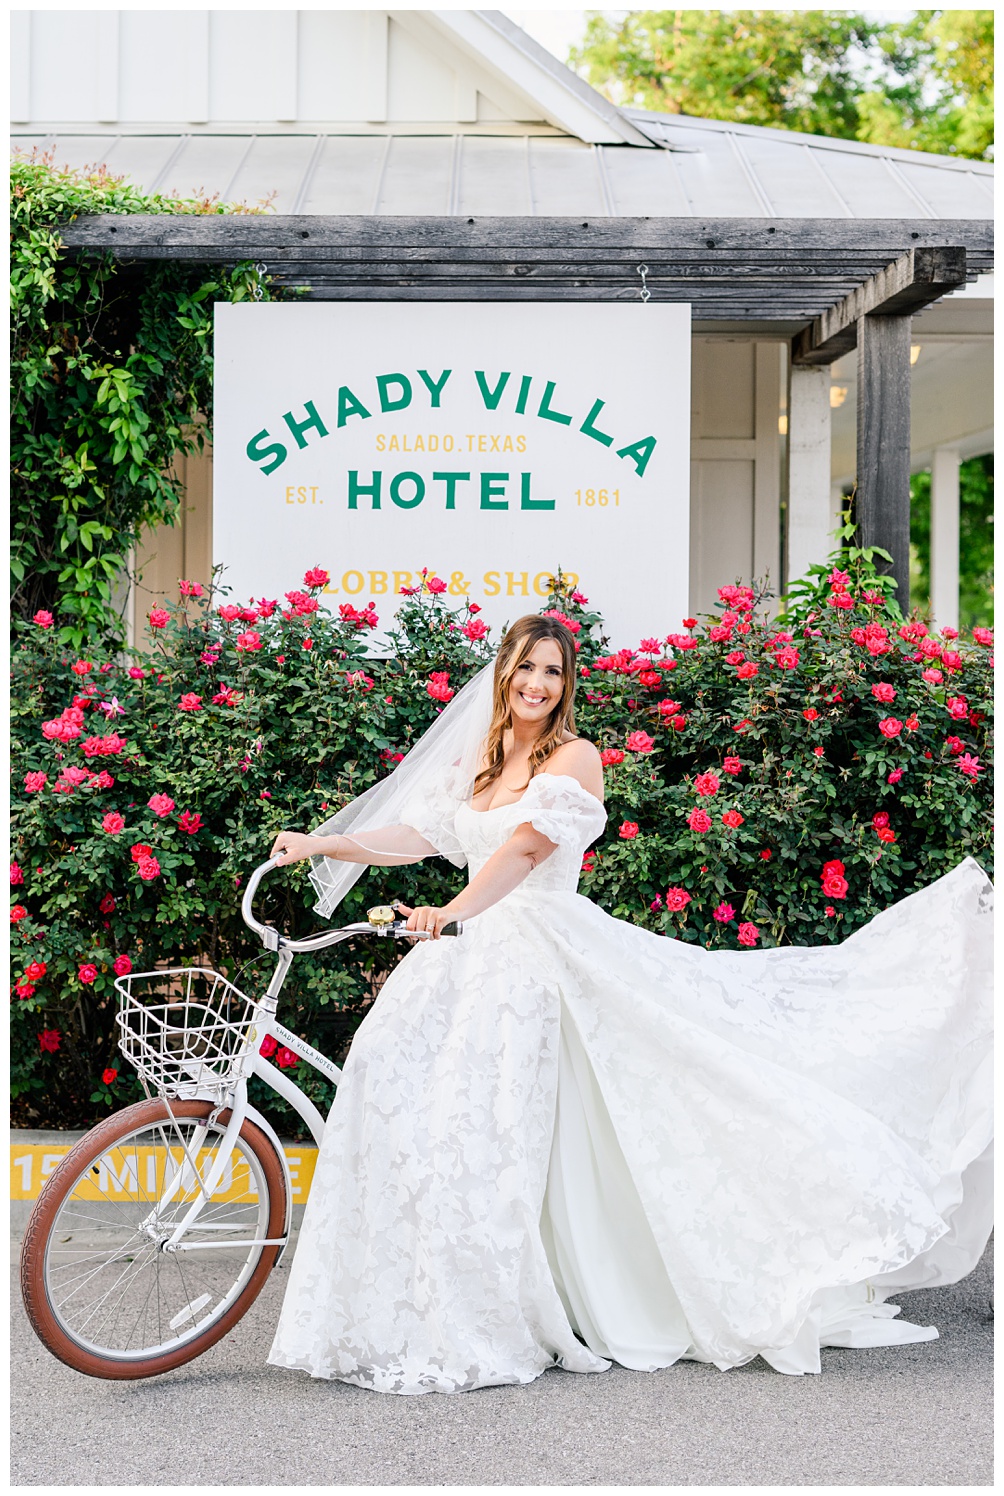 Shady Villa Hotel Bridal Portraits